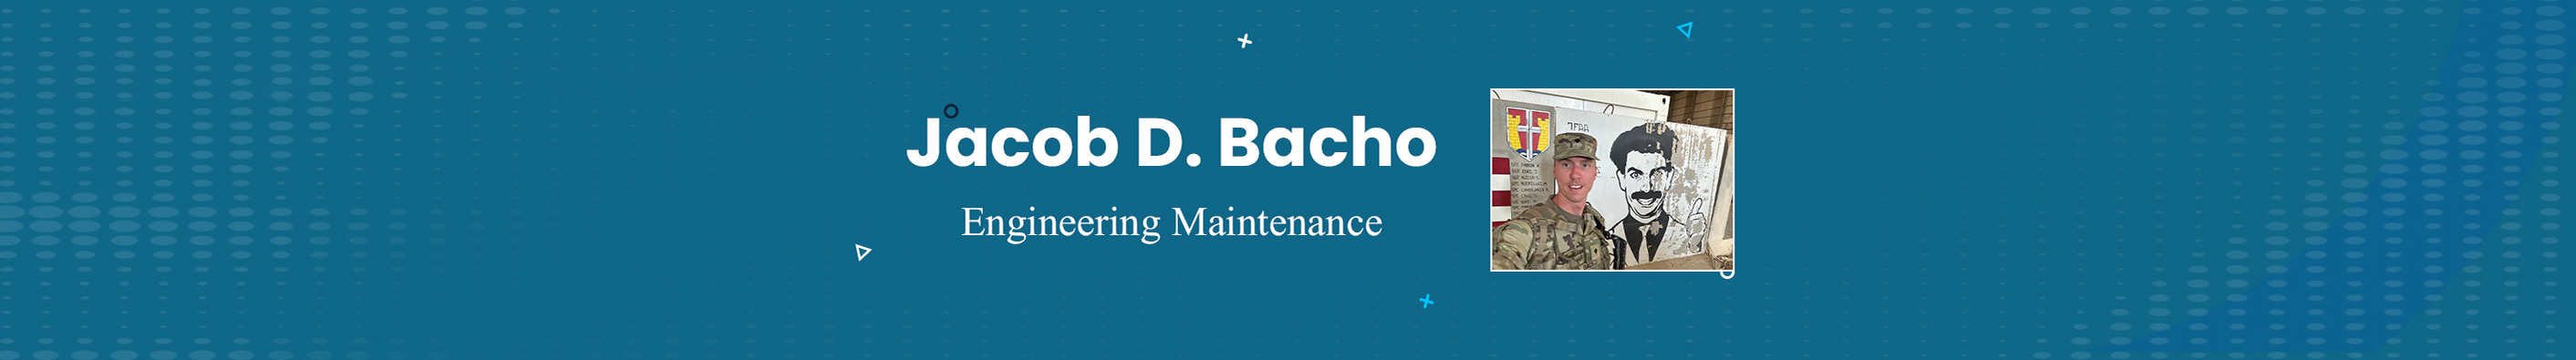 Jacob D. Bacho's profile banner